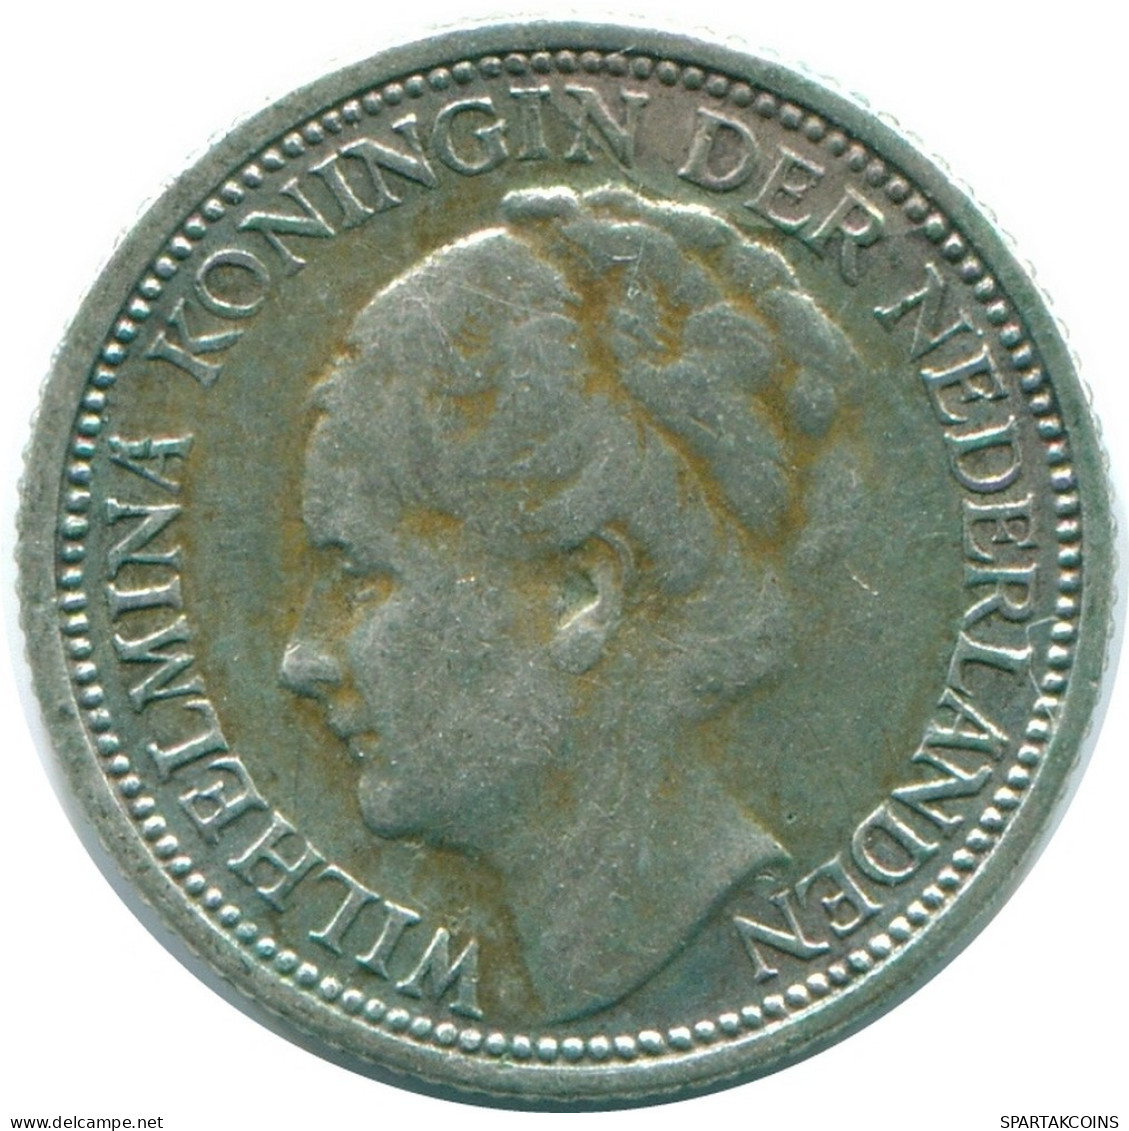 1/10 GULDEN 1947 CURACAO Netherlands SILVER Colonial Coin #NL11867.3.U.A